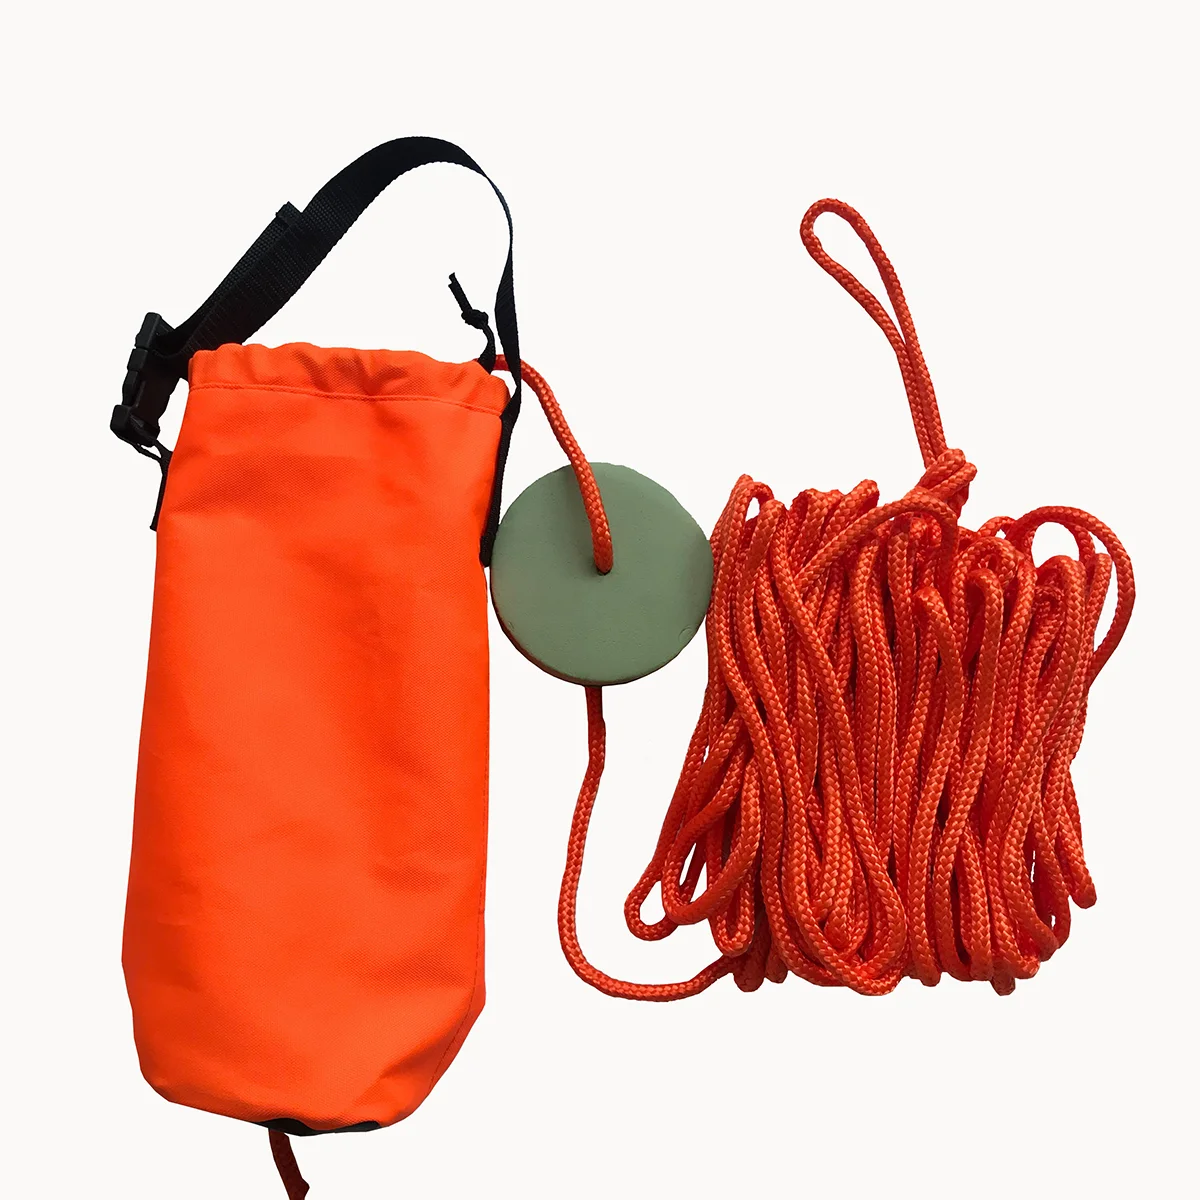 Nieuwe Coast Marine Life Rescue Throw Rope Bag-productie